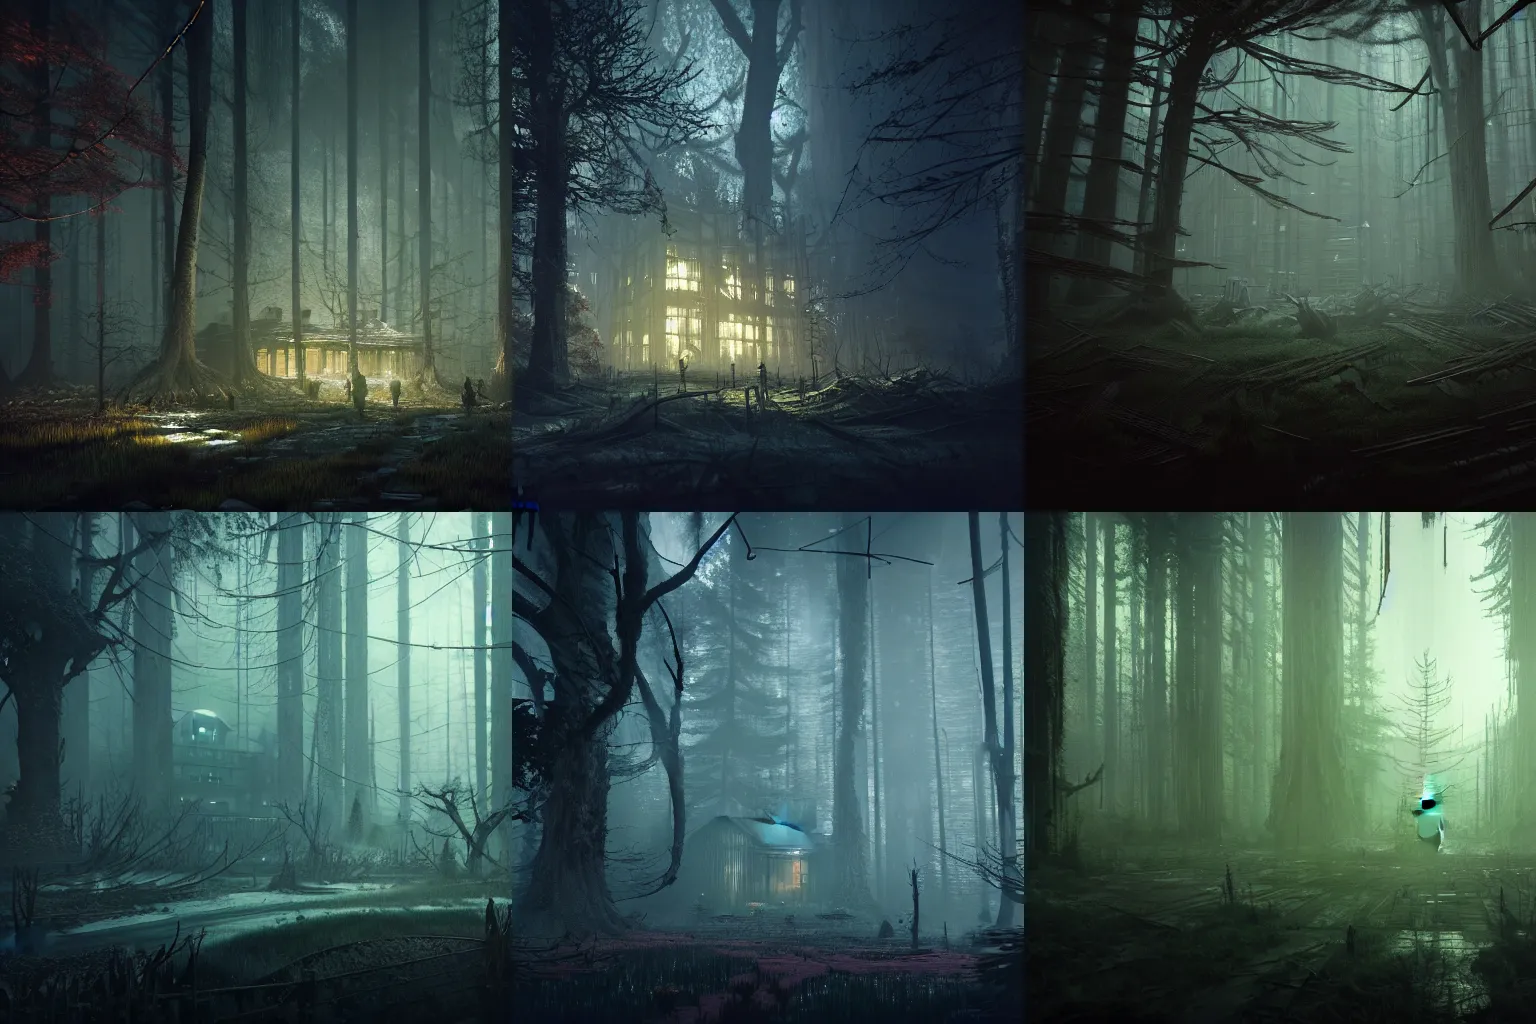 Prompt: a building in a creepy dark forest, haunted, eerie, Wadim Kashin, featured in artstation, octane render, cinematic, elegant, intricate, 8k